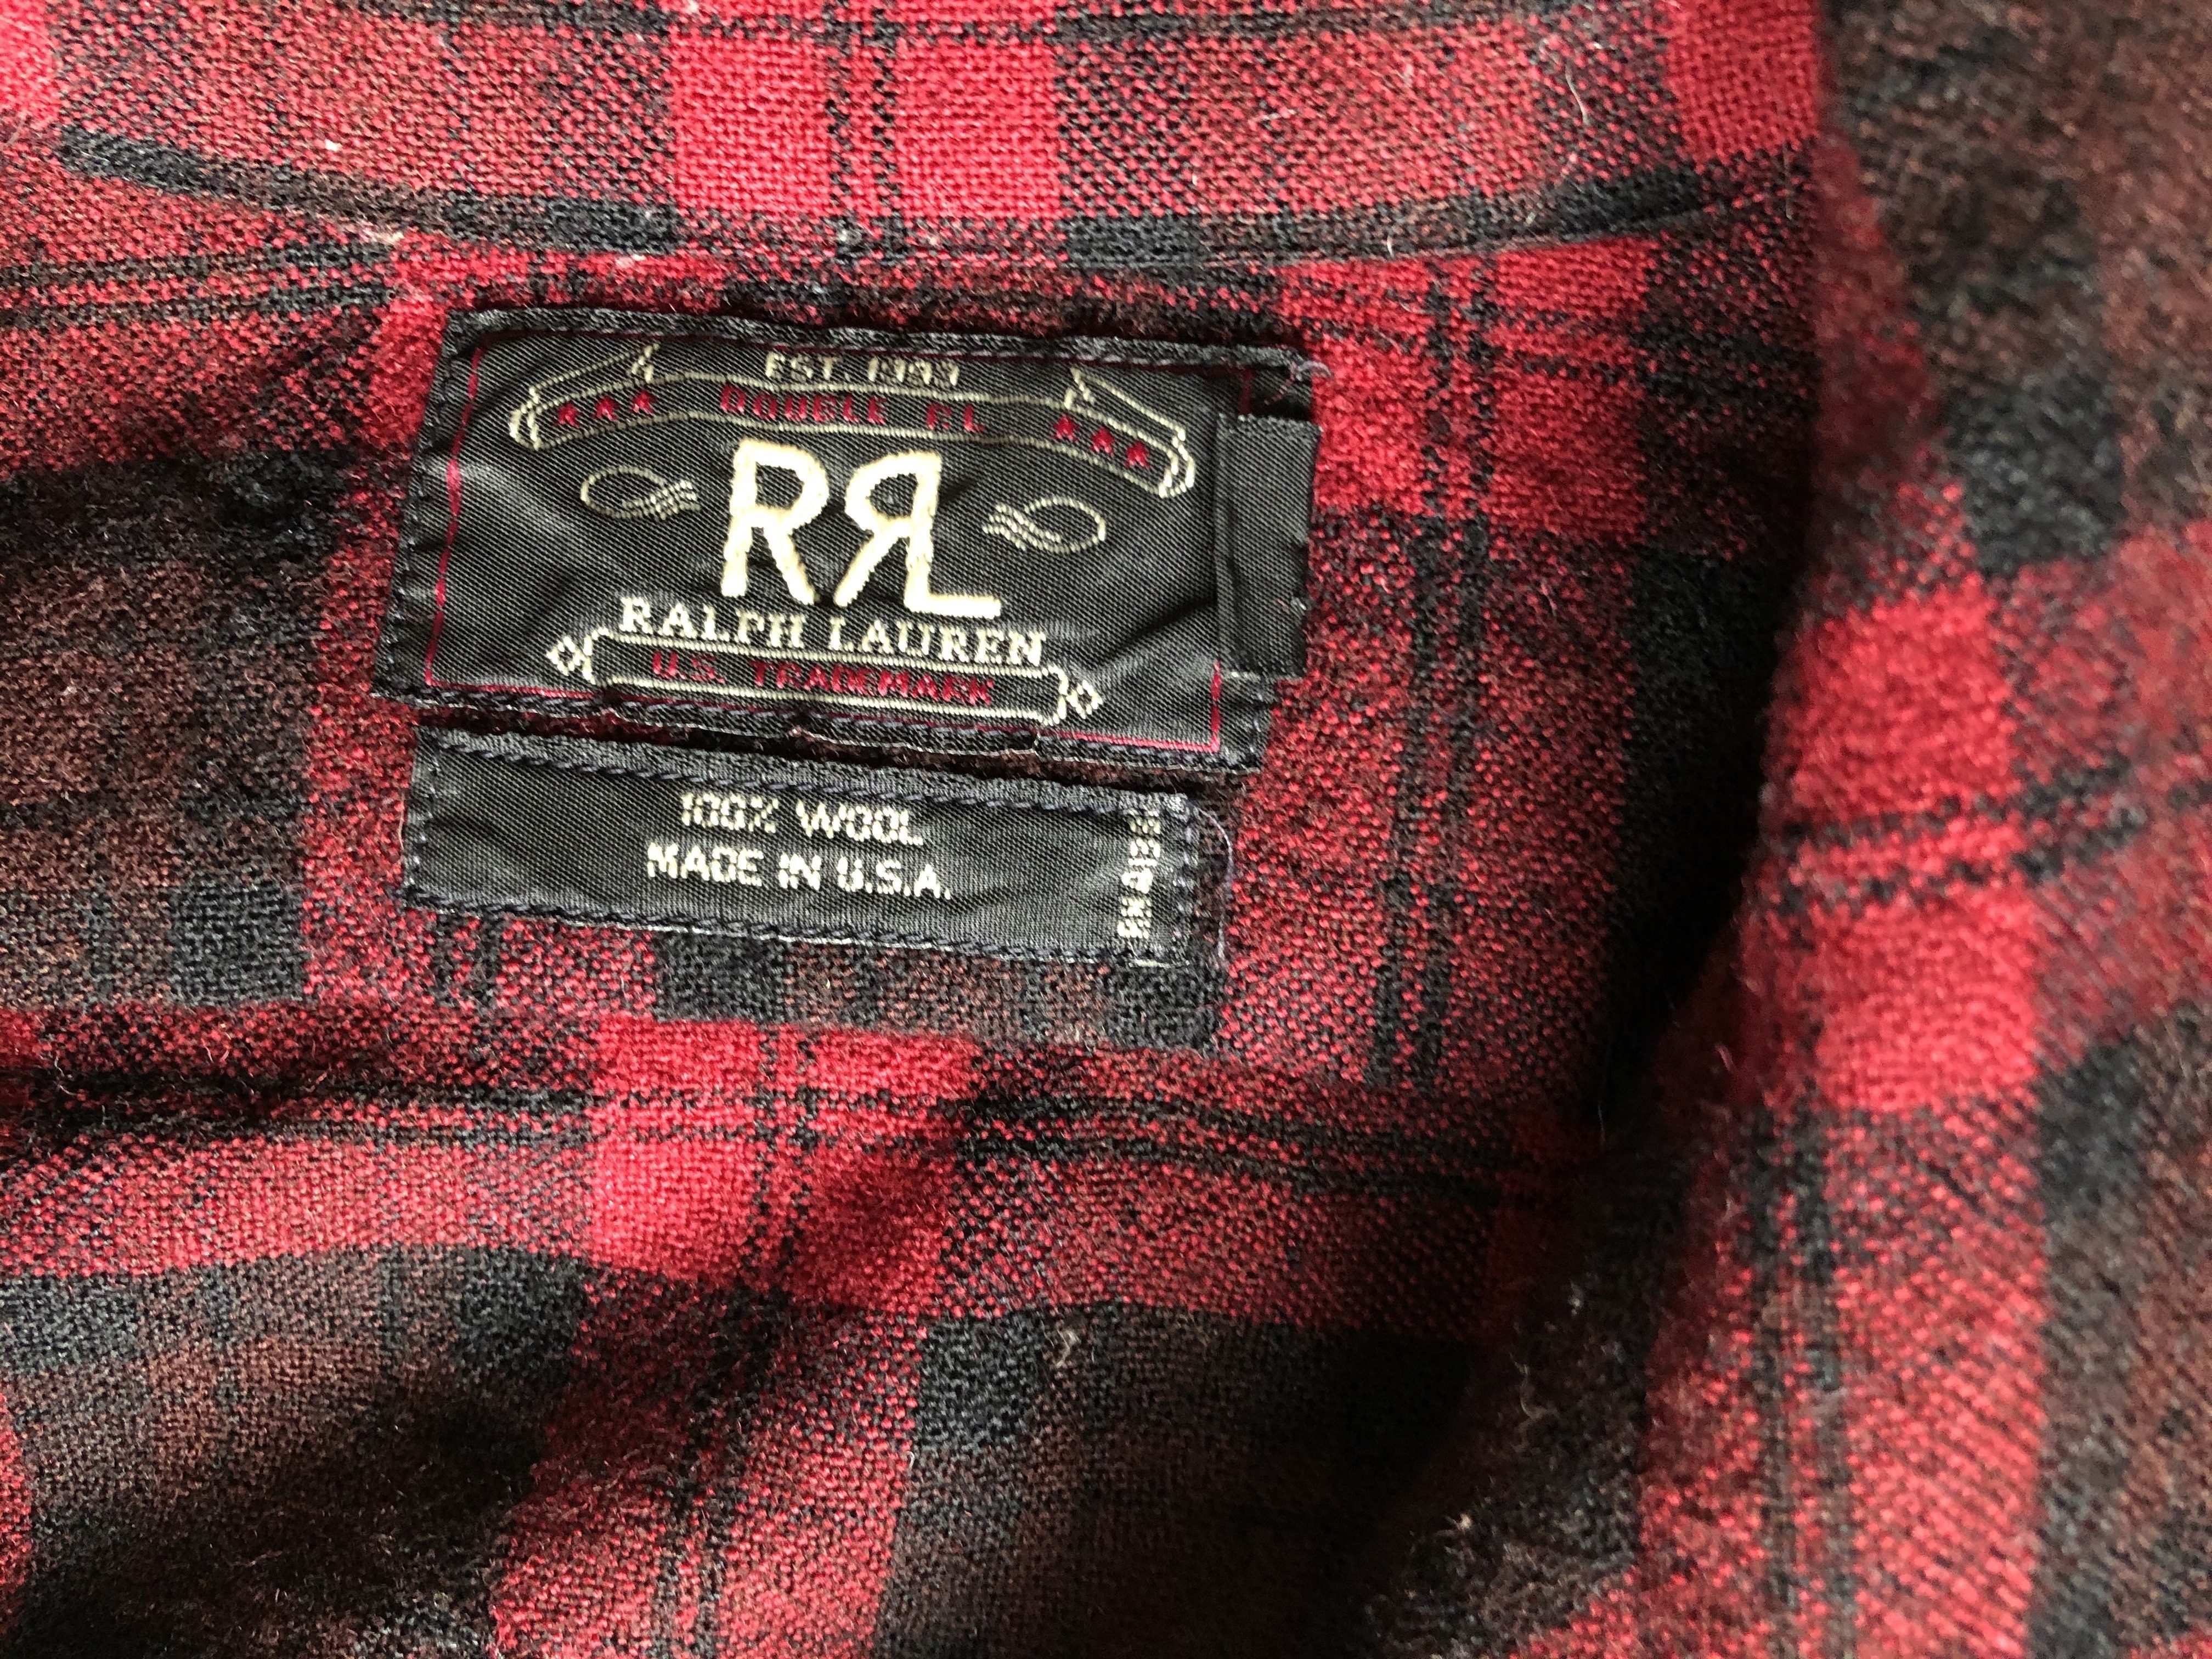 Rr Ralph Lauren - RRL 100% Wool Classic Plaid - made in USA - 3